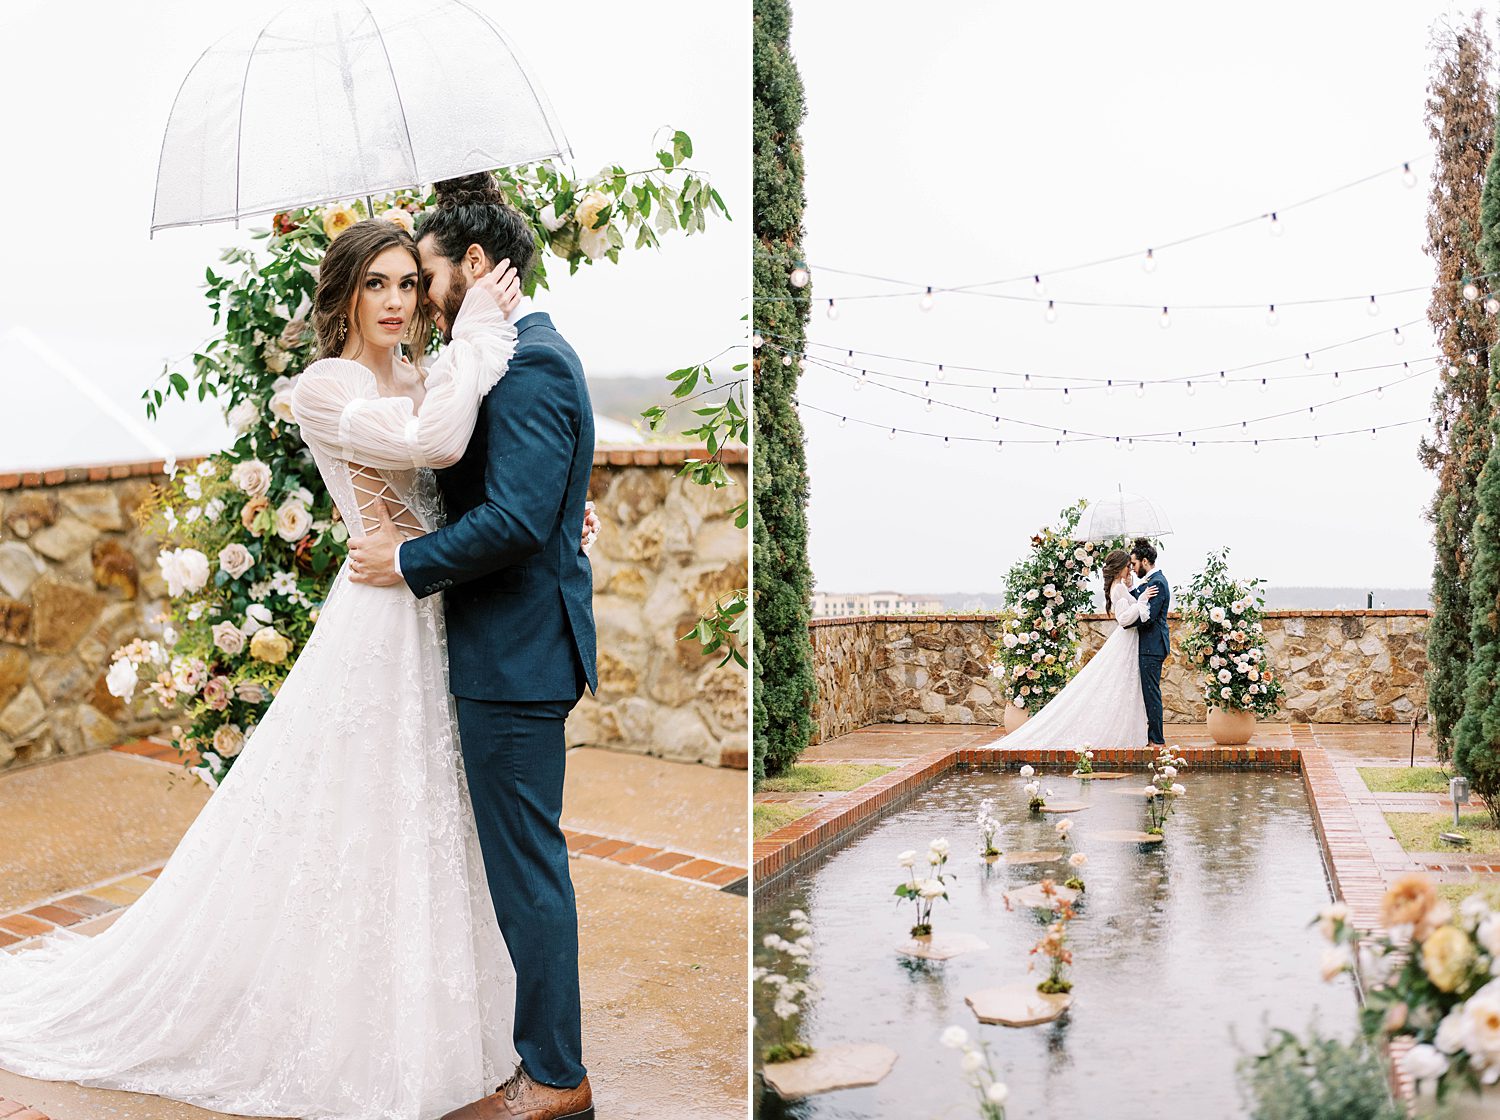 romantic wedding portraits in the rain